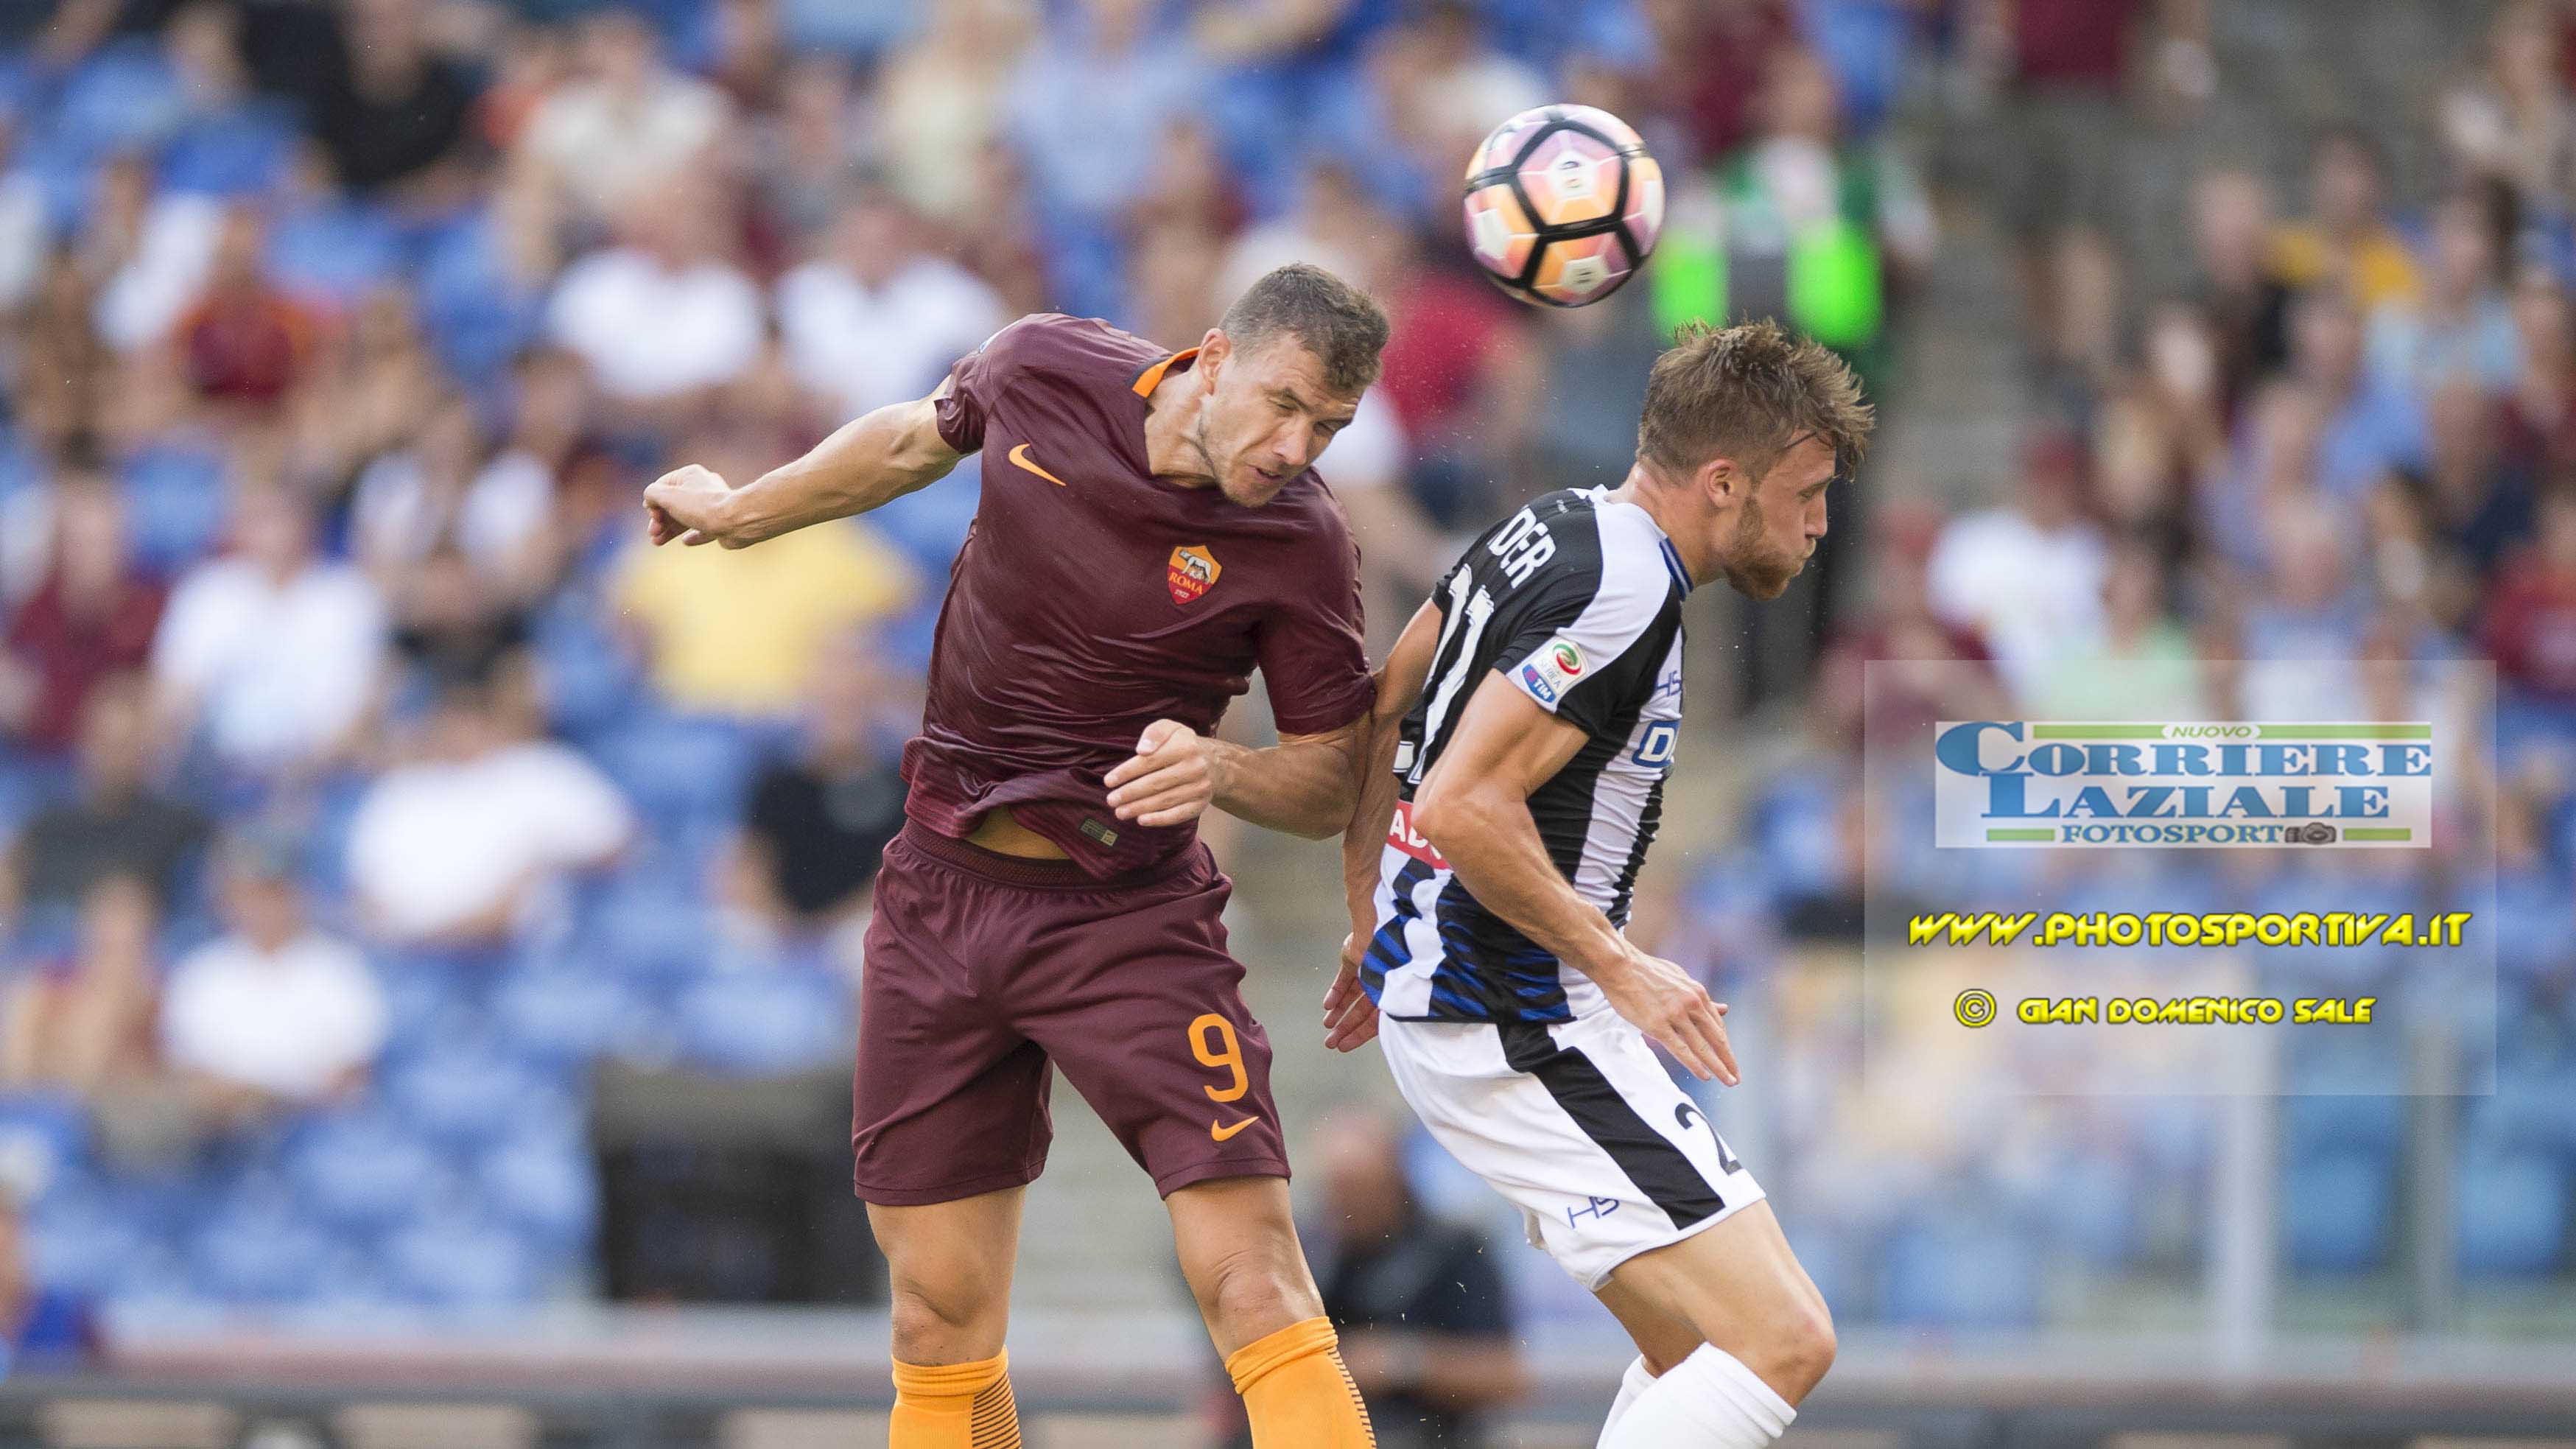 Europa League, in Romania regna l’equilibrio, tra Astra Giurgiu e Roma finisce 0-0